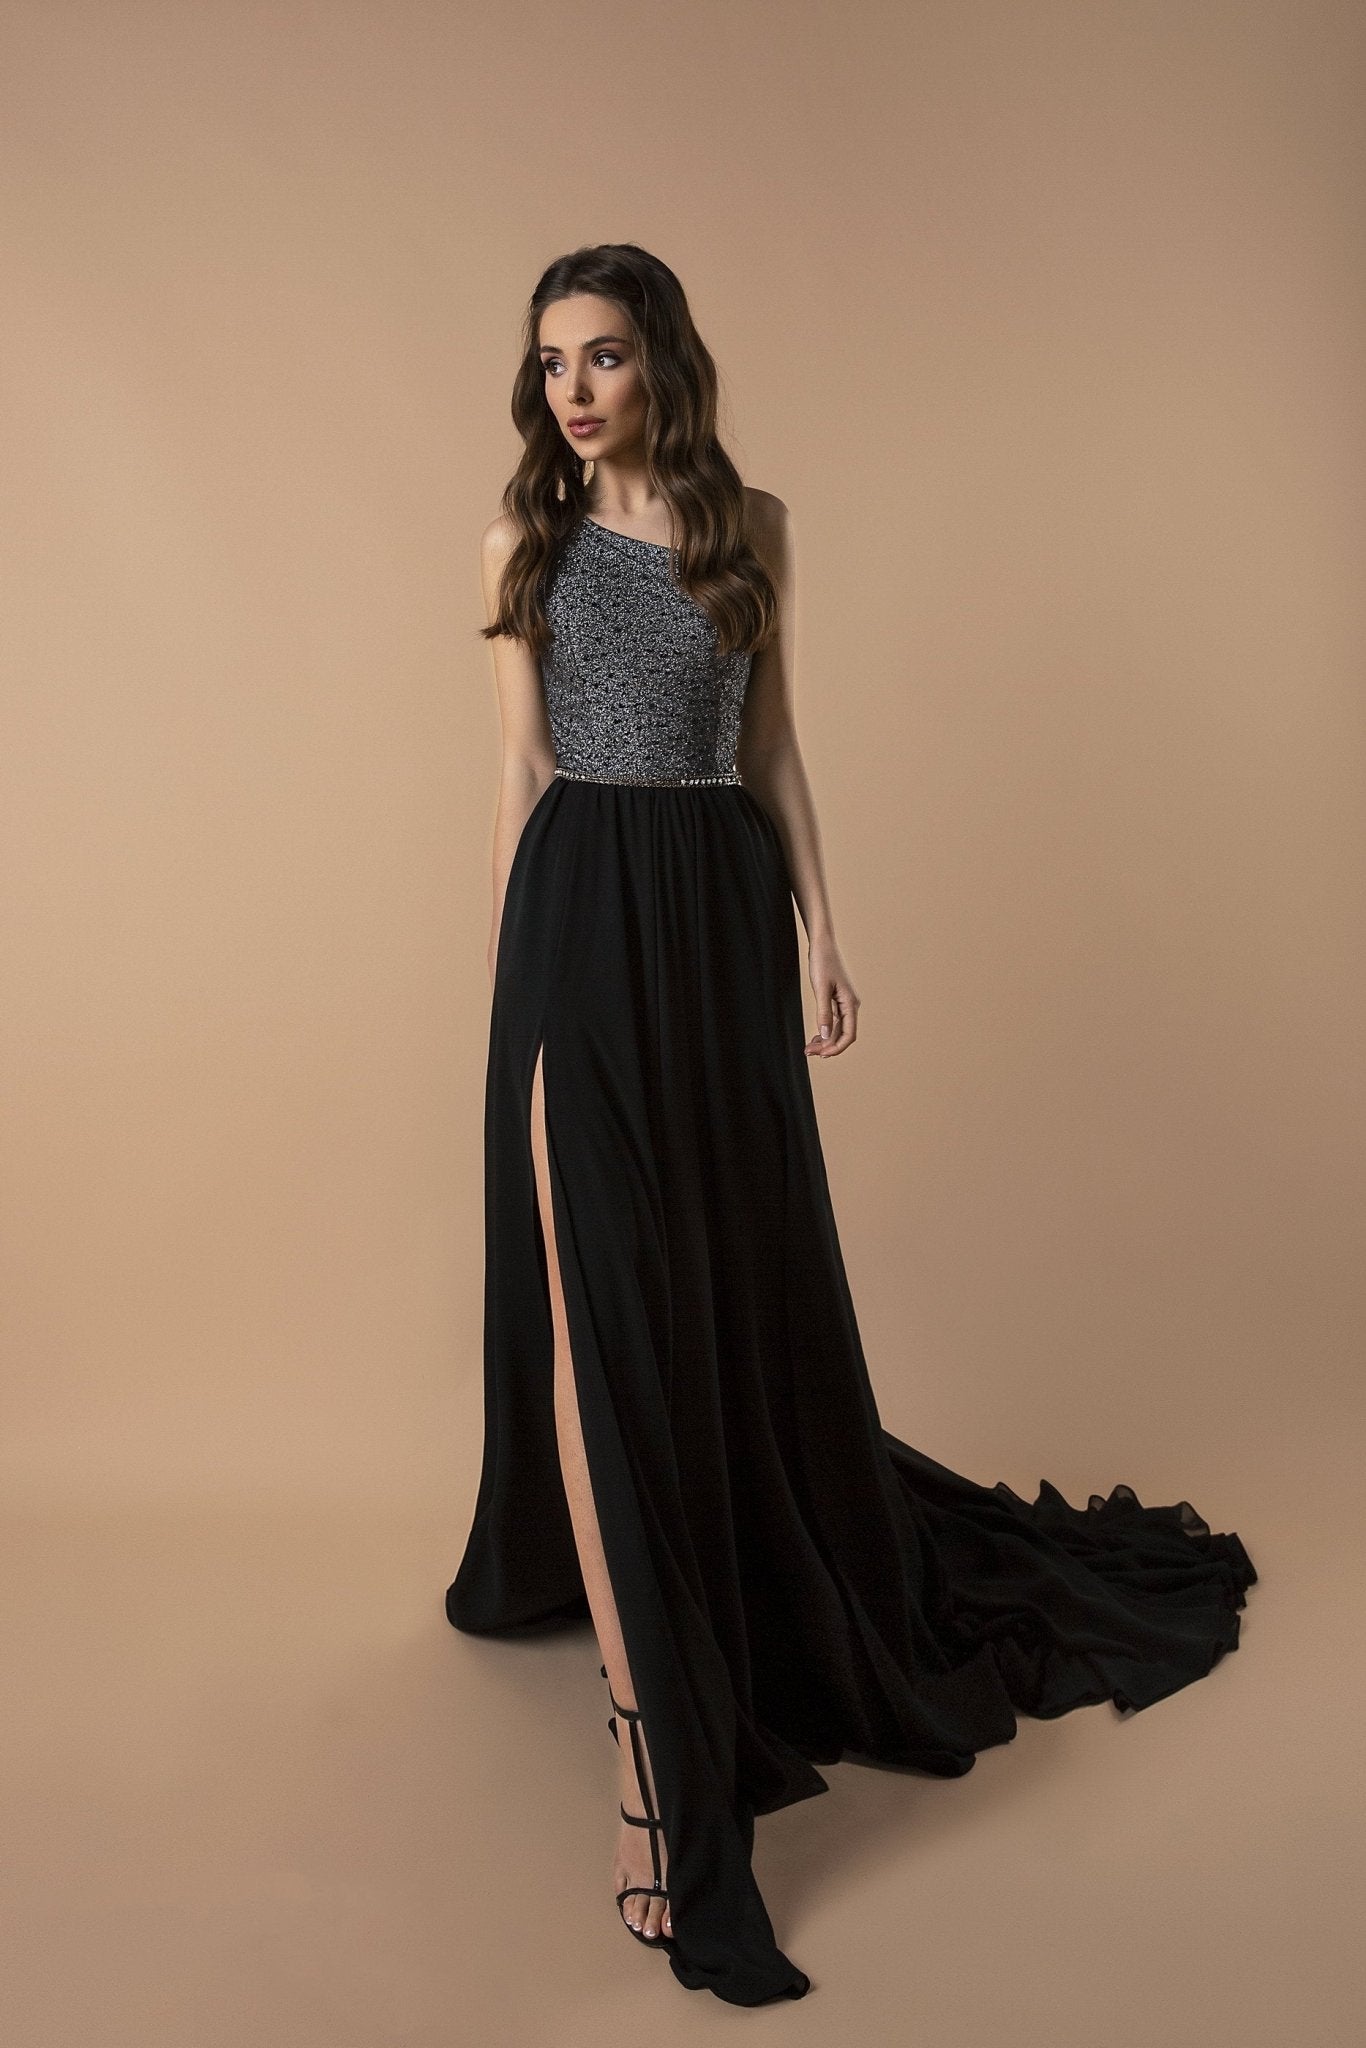 Elegant Asymmetrical Black Evening Gown with Sequin Embellishment and Leg Slit - Black Gothic Formal Dresses Plus Size - WonderlandByLilian